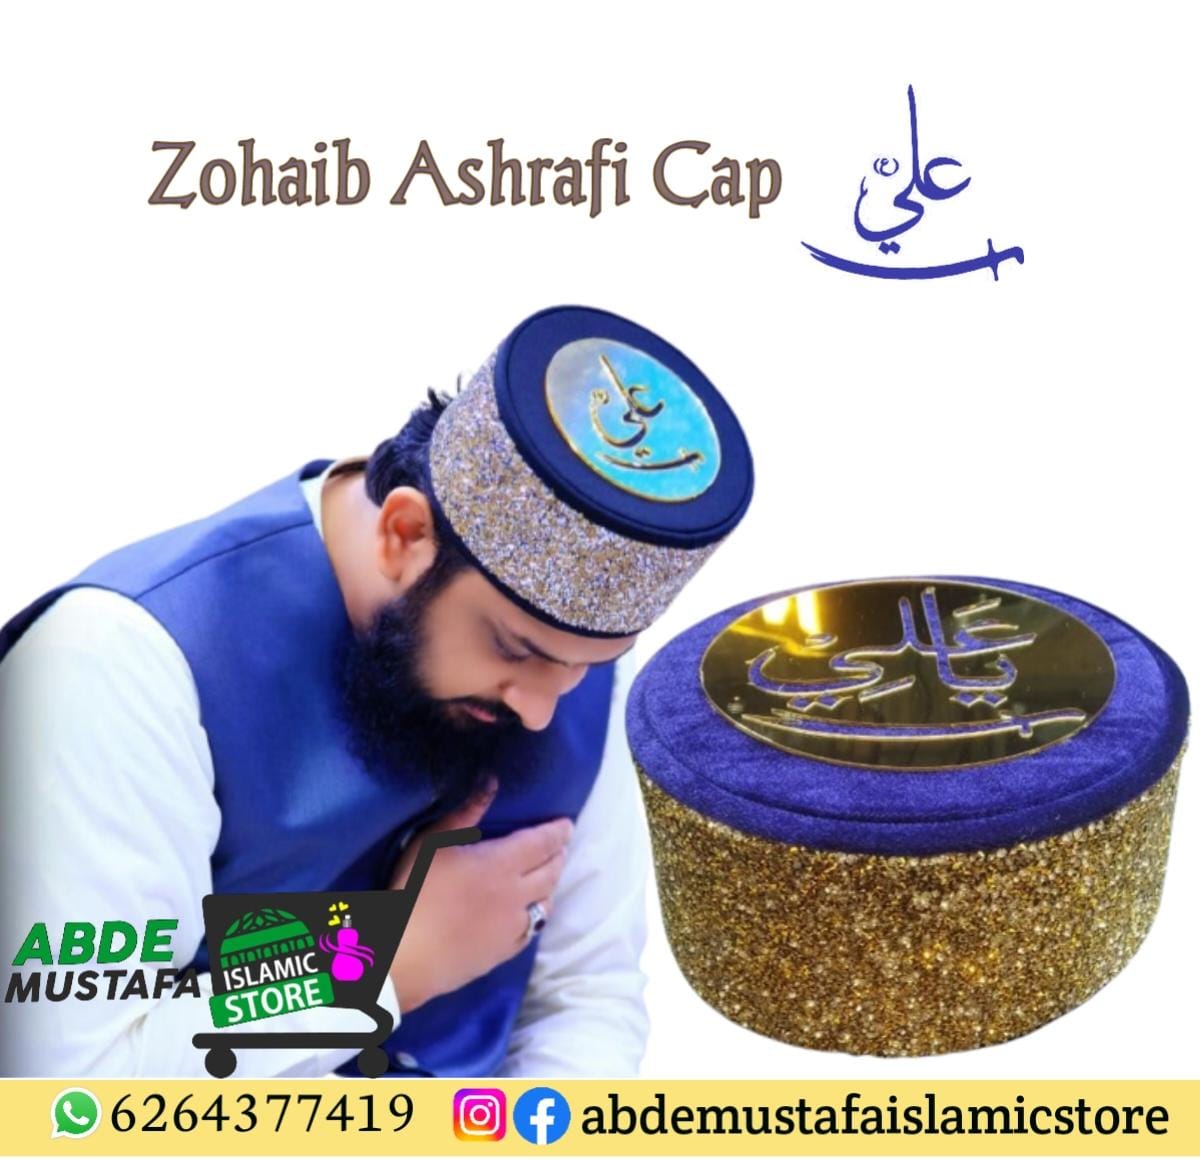 Zohaib Ashrafi Stylish Cap By Abde Mustafa Store (Model No. 1502)